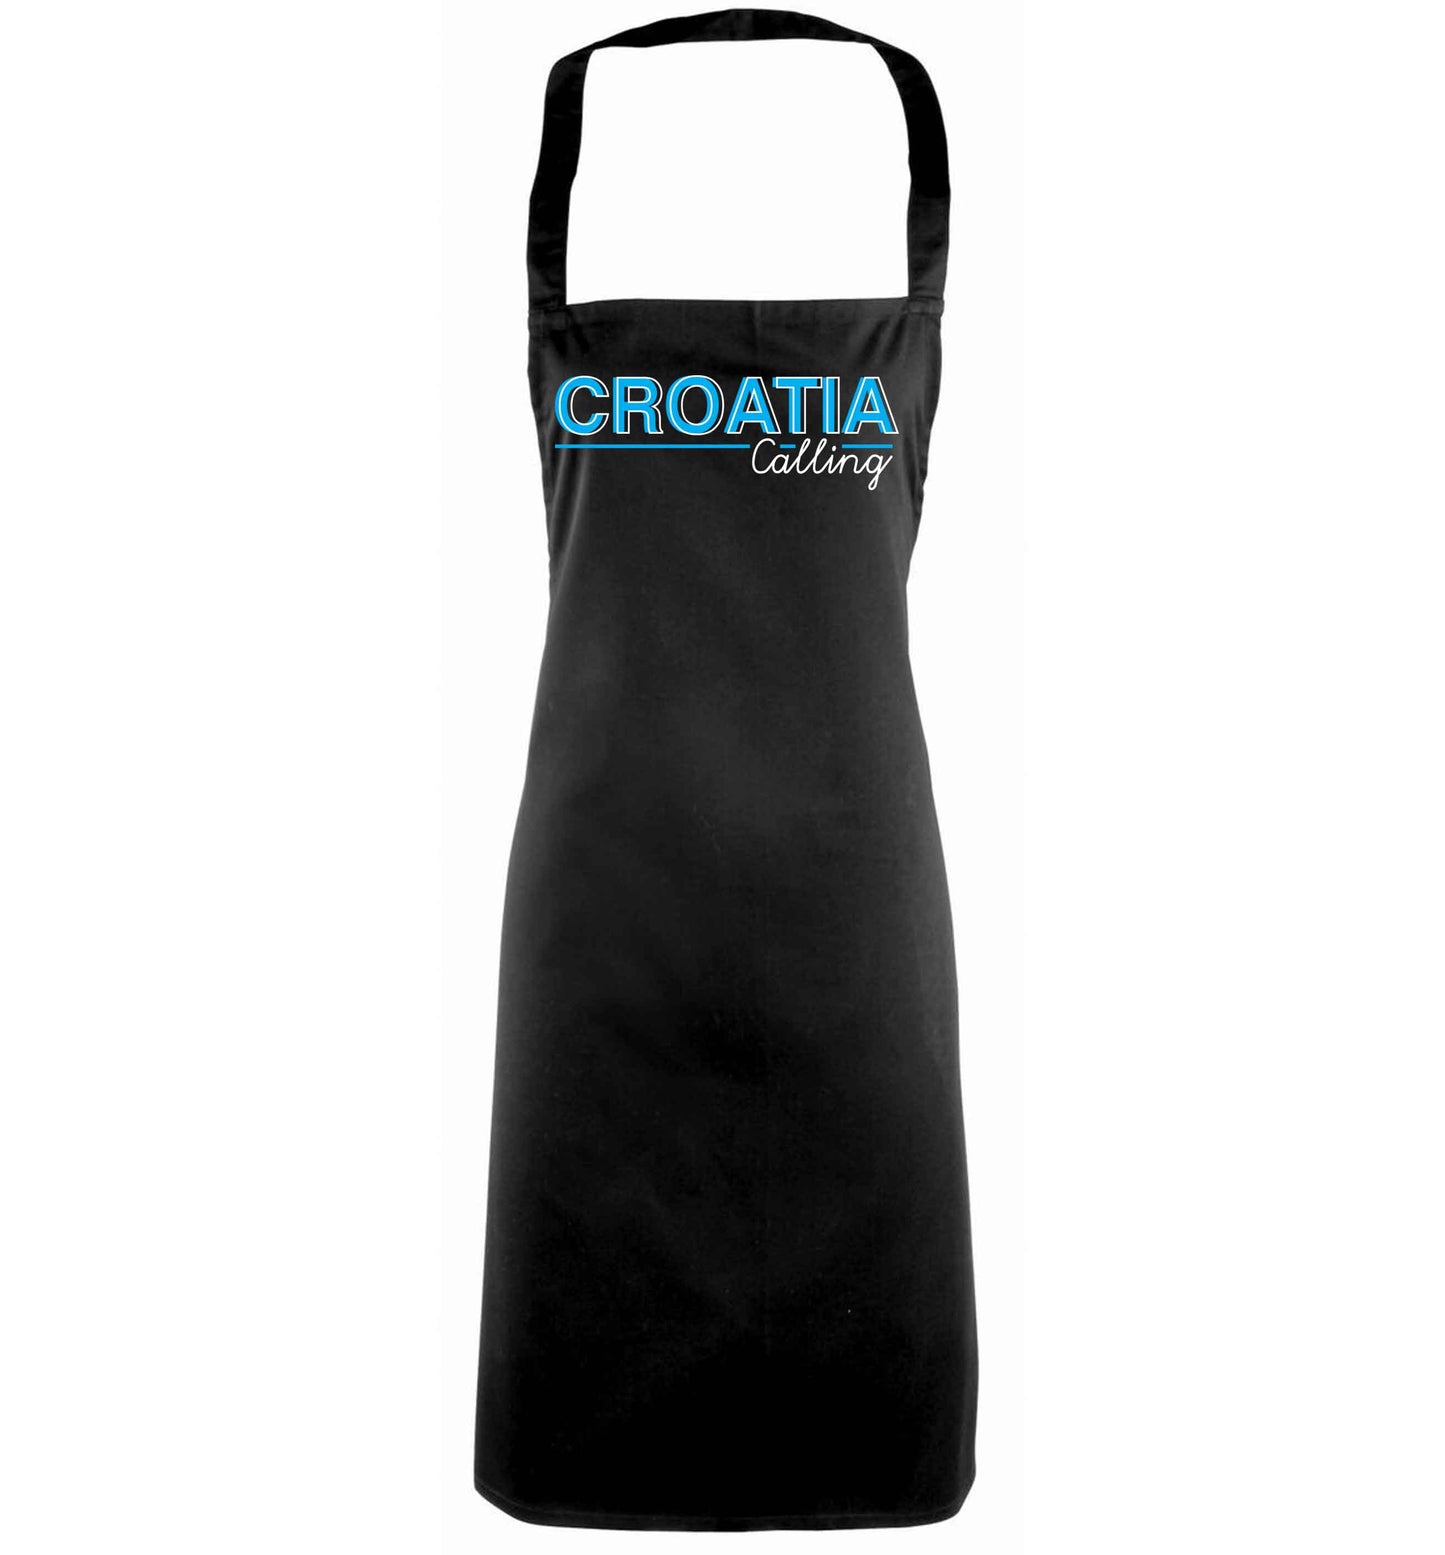 Croatia calling black apron